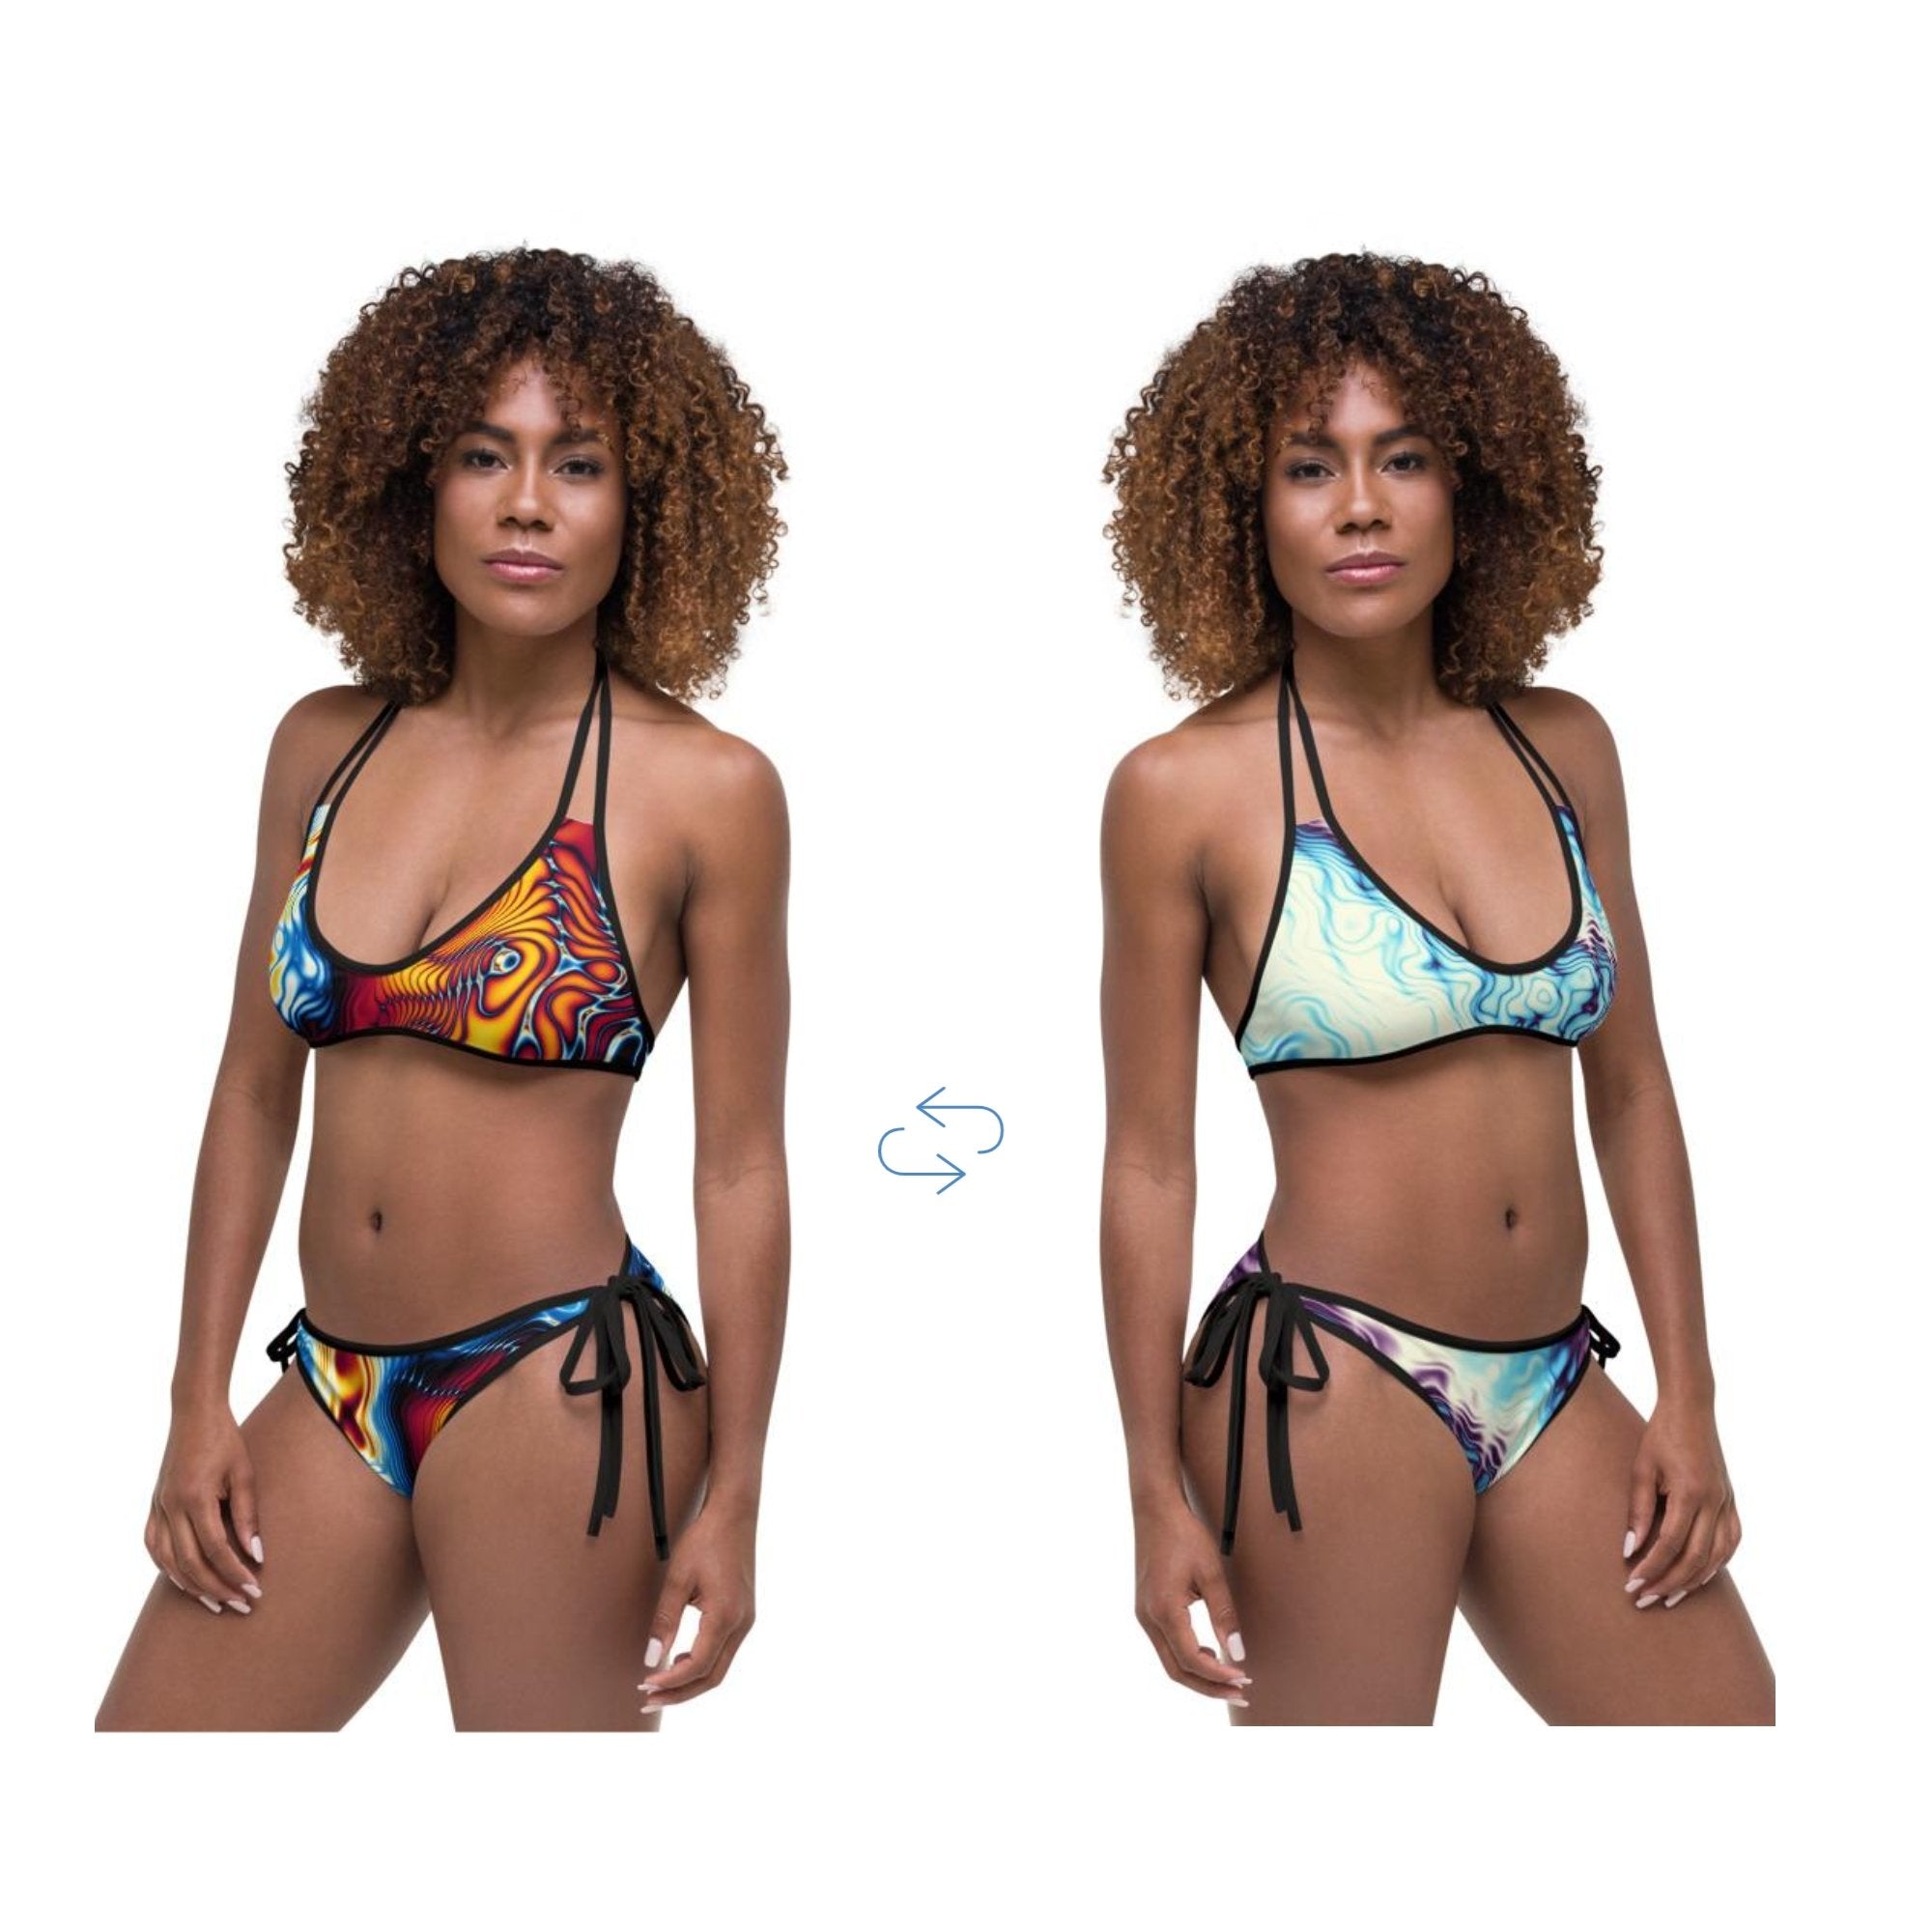 Abstract Marble Print Colorful Psychedelic Beach Style Reversible Bikini Set, Two Piece Reversible Bikini Set - kayzers